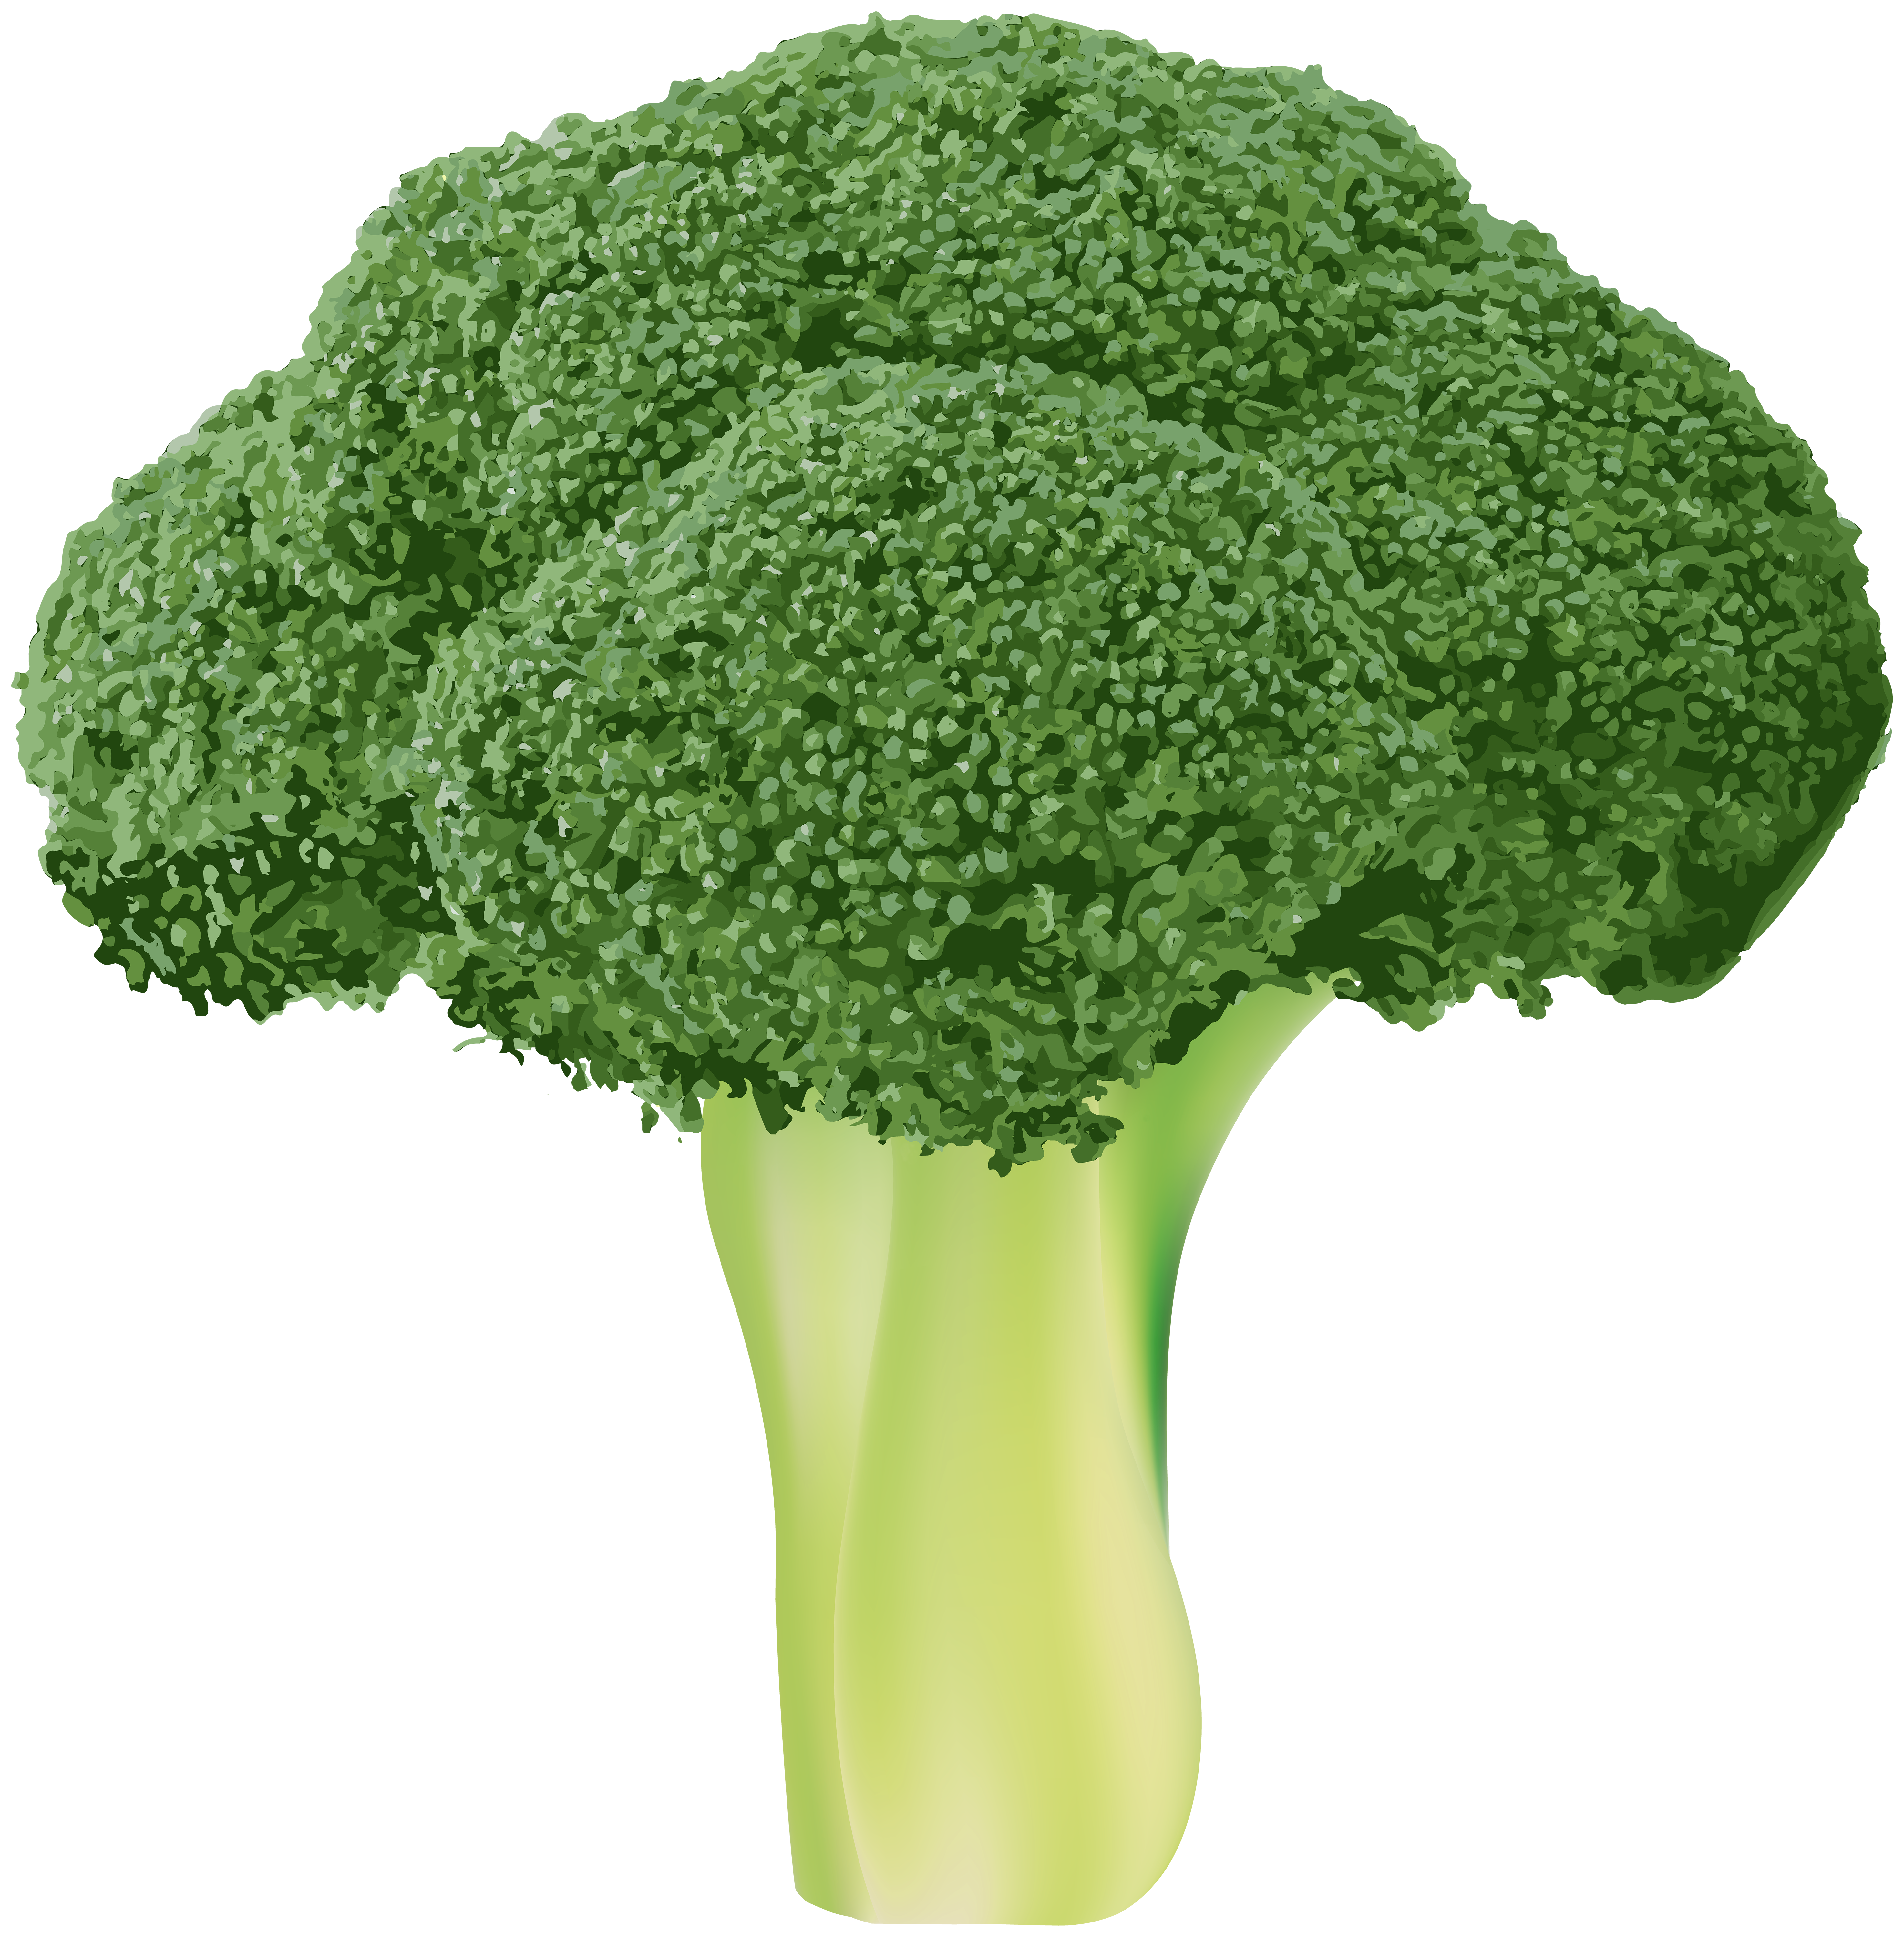 Png clip art image. Broccoli clipart transparent background